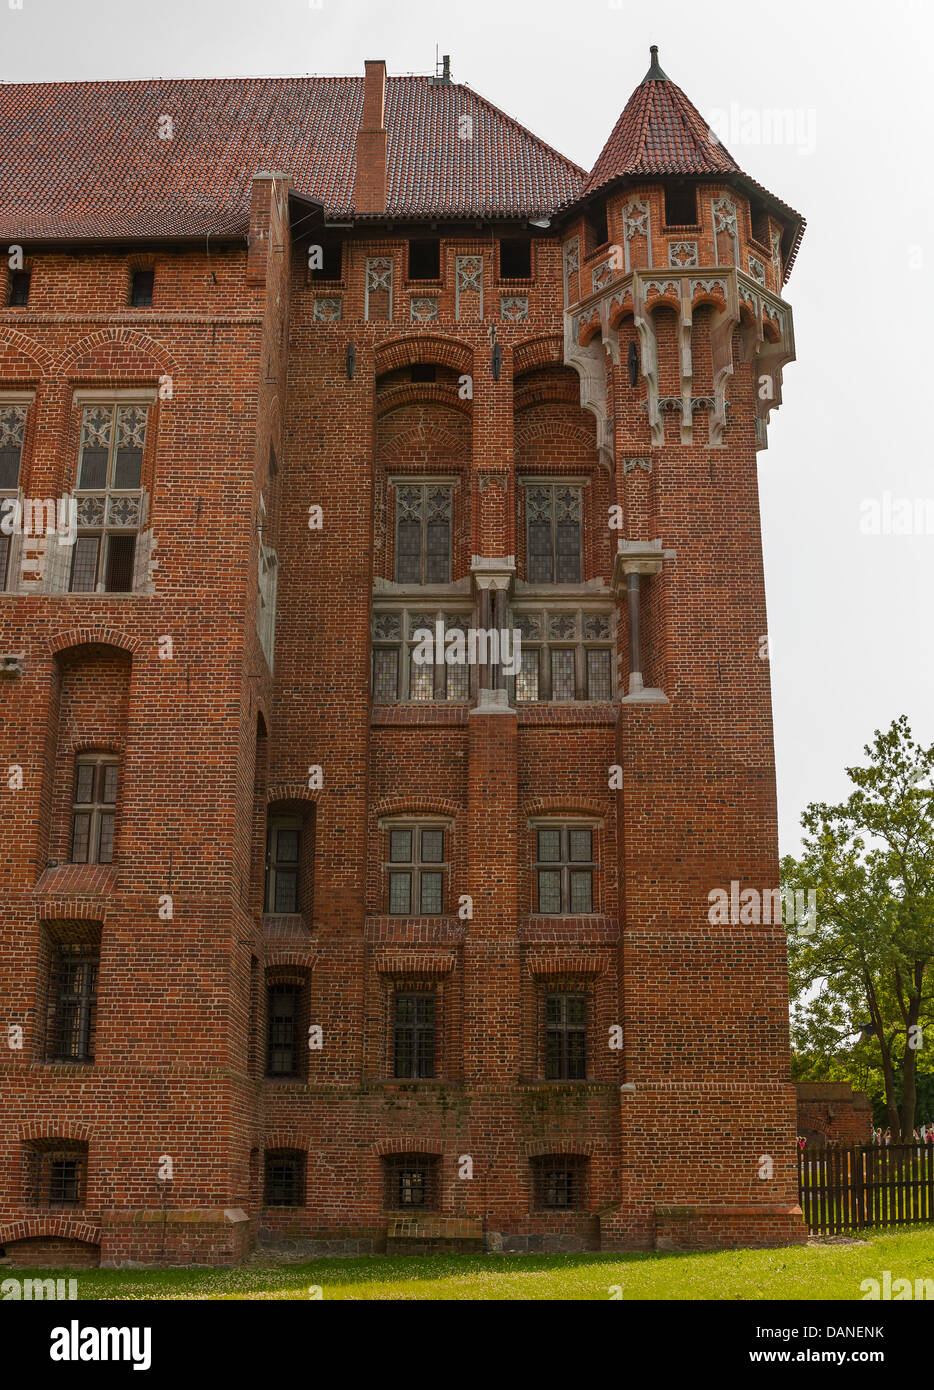 Malbork castle Stock Photo